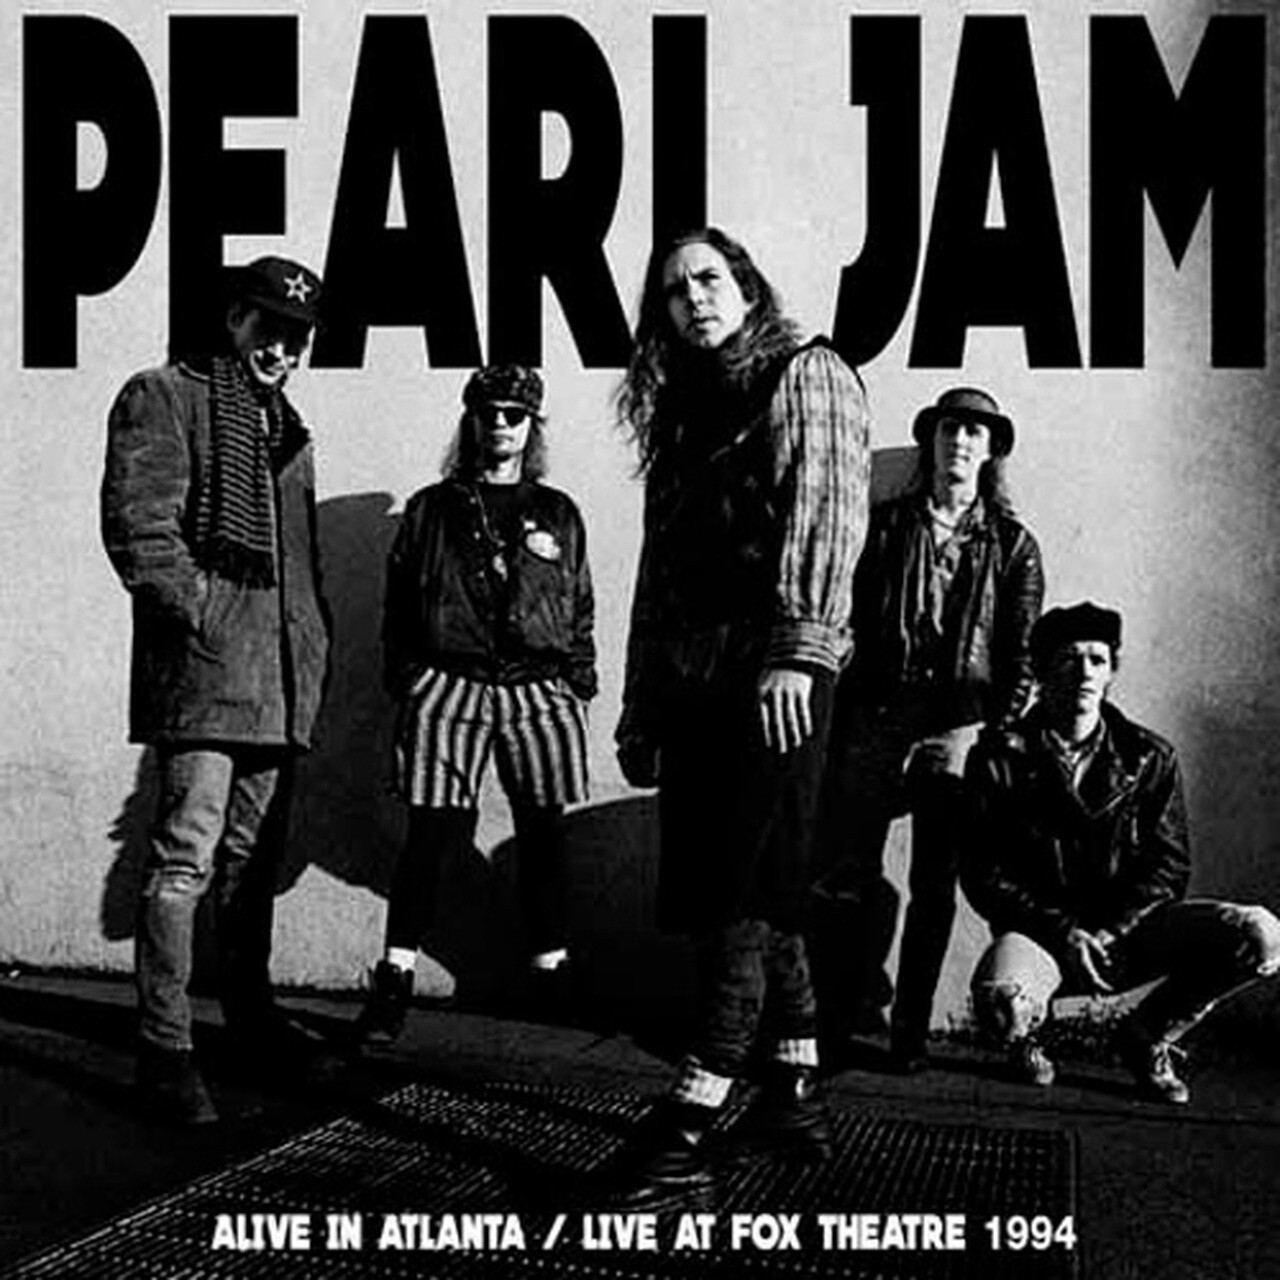 Pearl Jam / Alive In Atlanta - Fox Theatre 1994